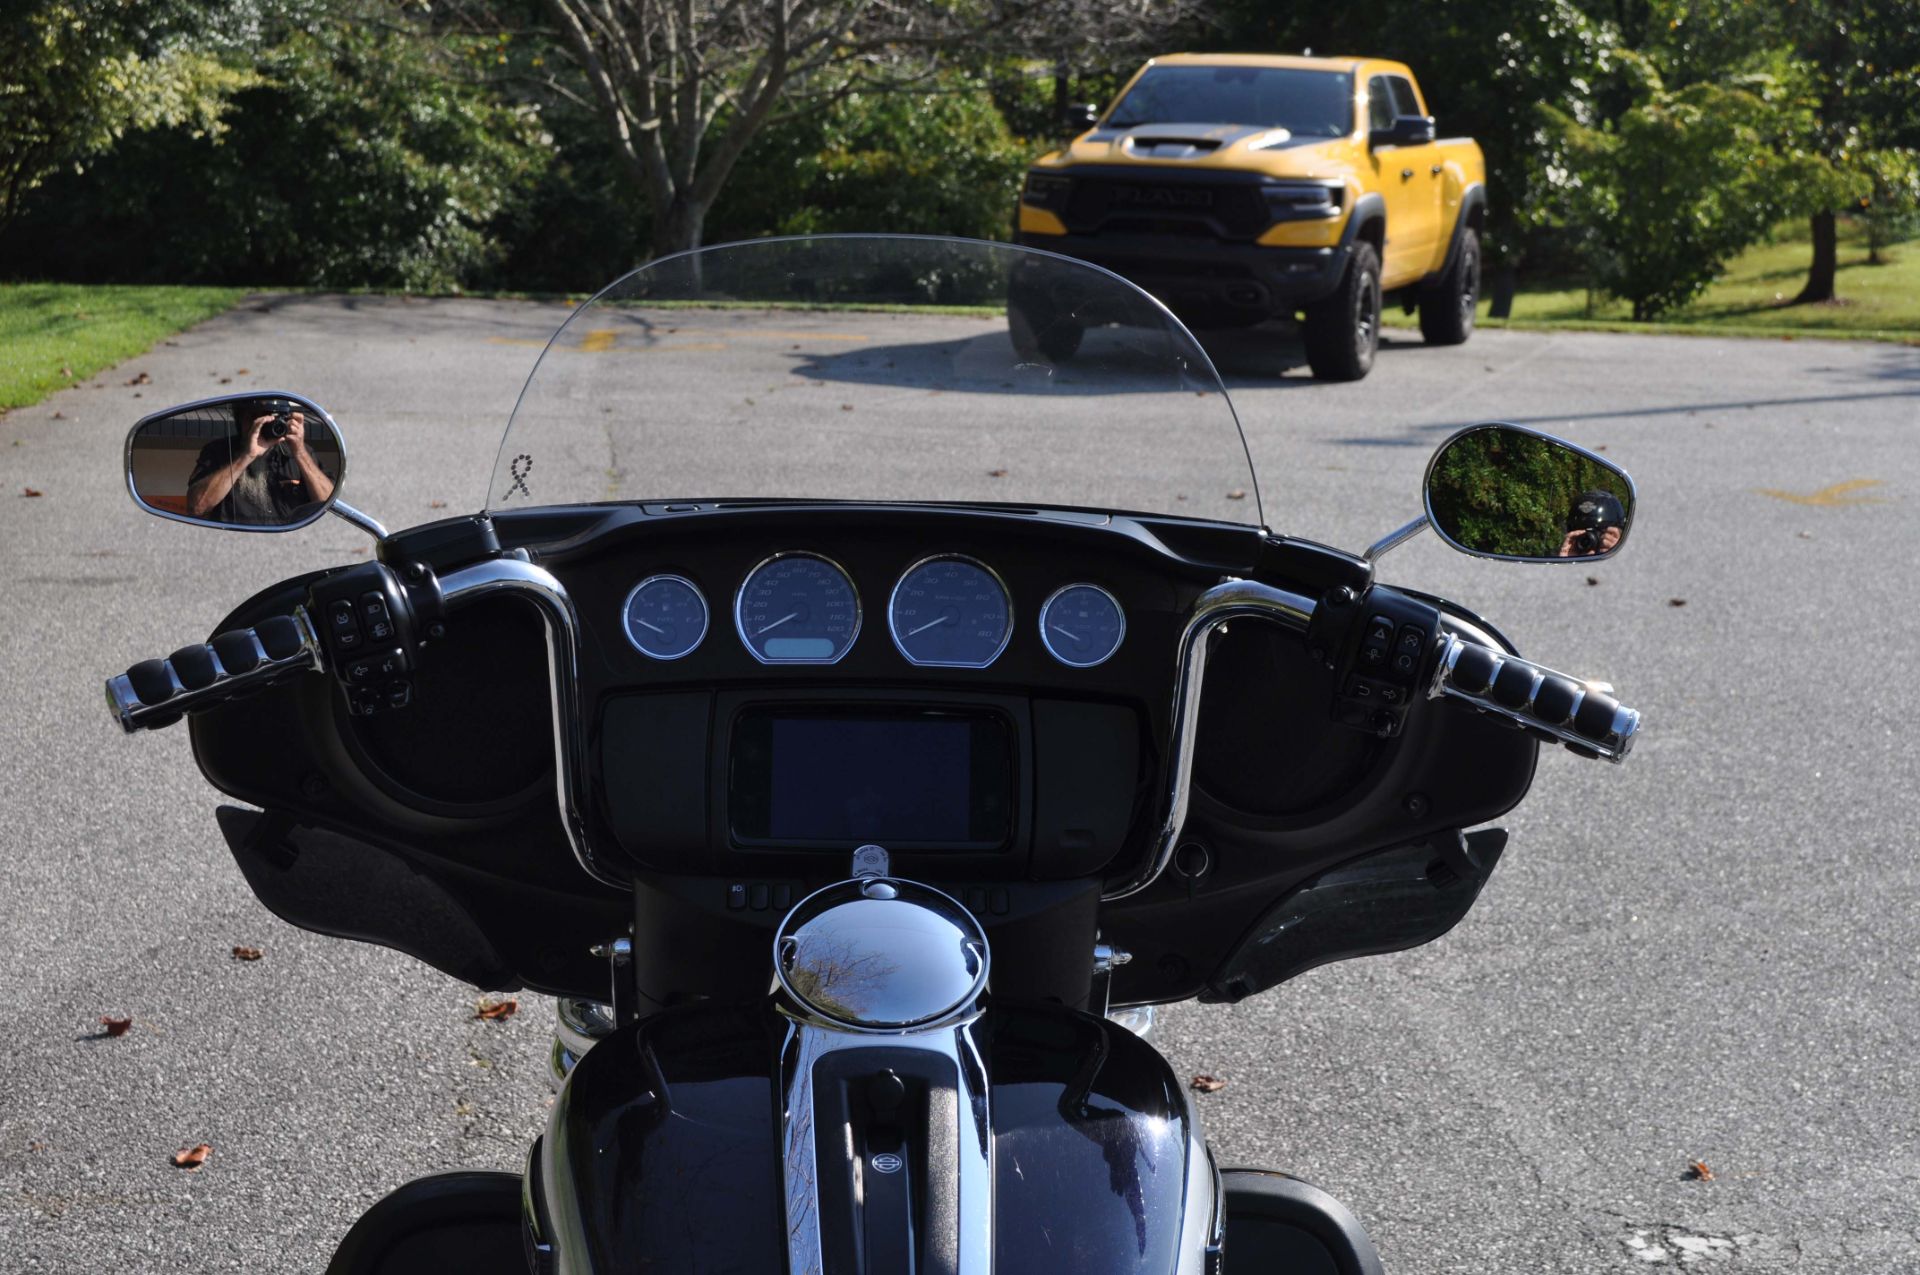 2019 Harley-Davidson Tri Glide® Ultra in Winston Salem, North Carolina - Photo 19